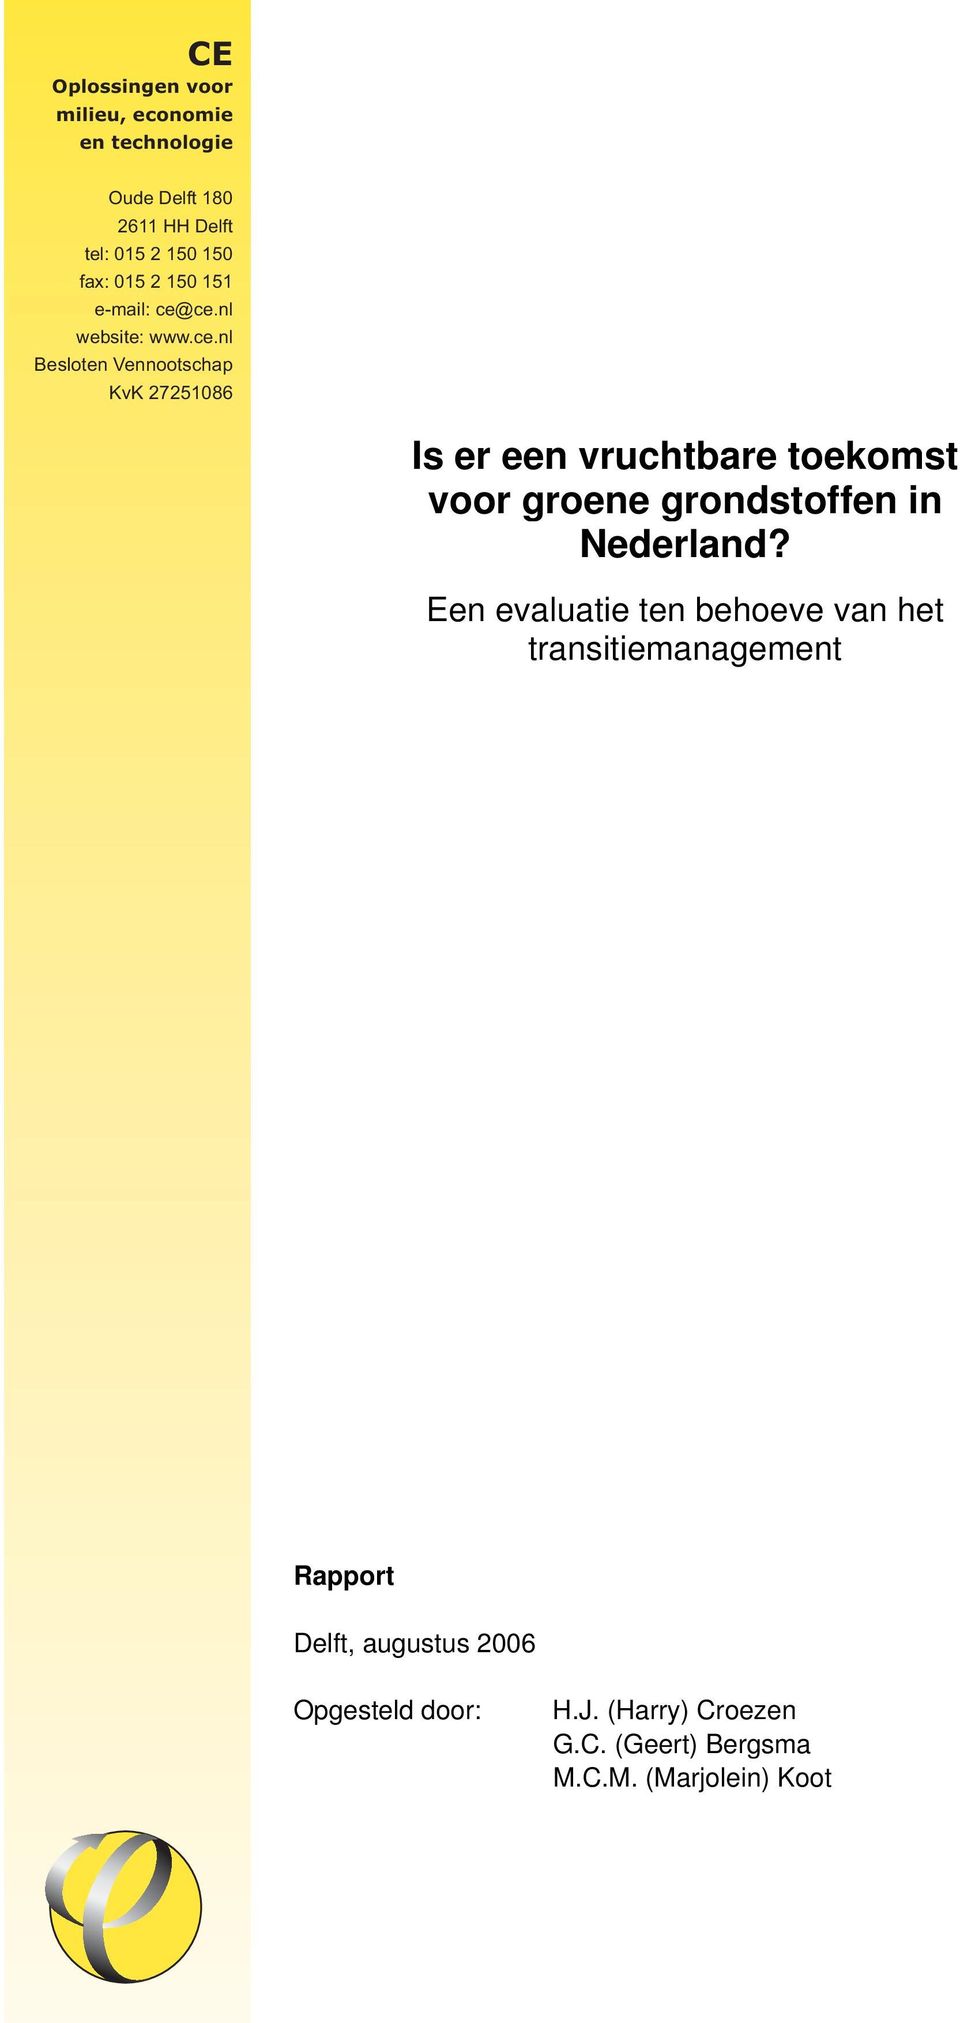 ce.nl 150 151 website: e-mail: www.ce.nl ce@ce.nl Besloten website: Vennootschap www.ce.nl KvK 27251086 Besloten Vennootschap KvK 27251086 Is er een vruchtbare toekomst voor groene grondstoffen in Nederland?